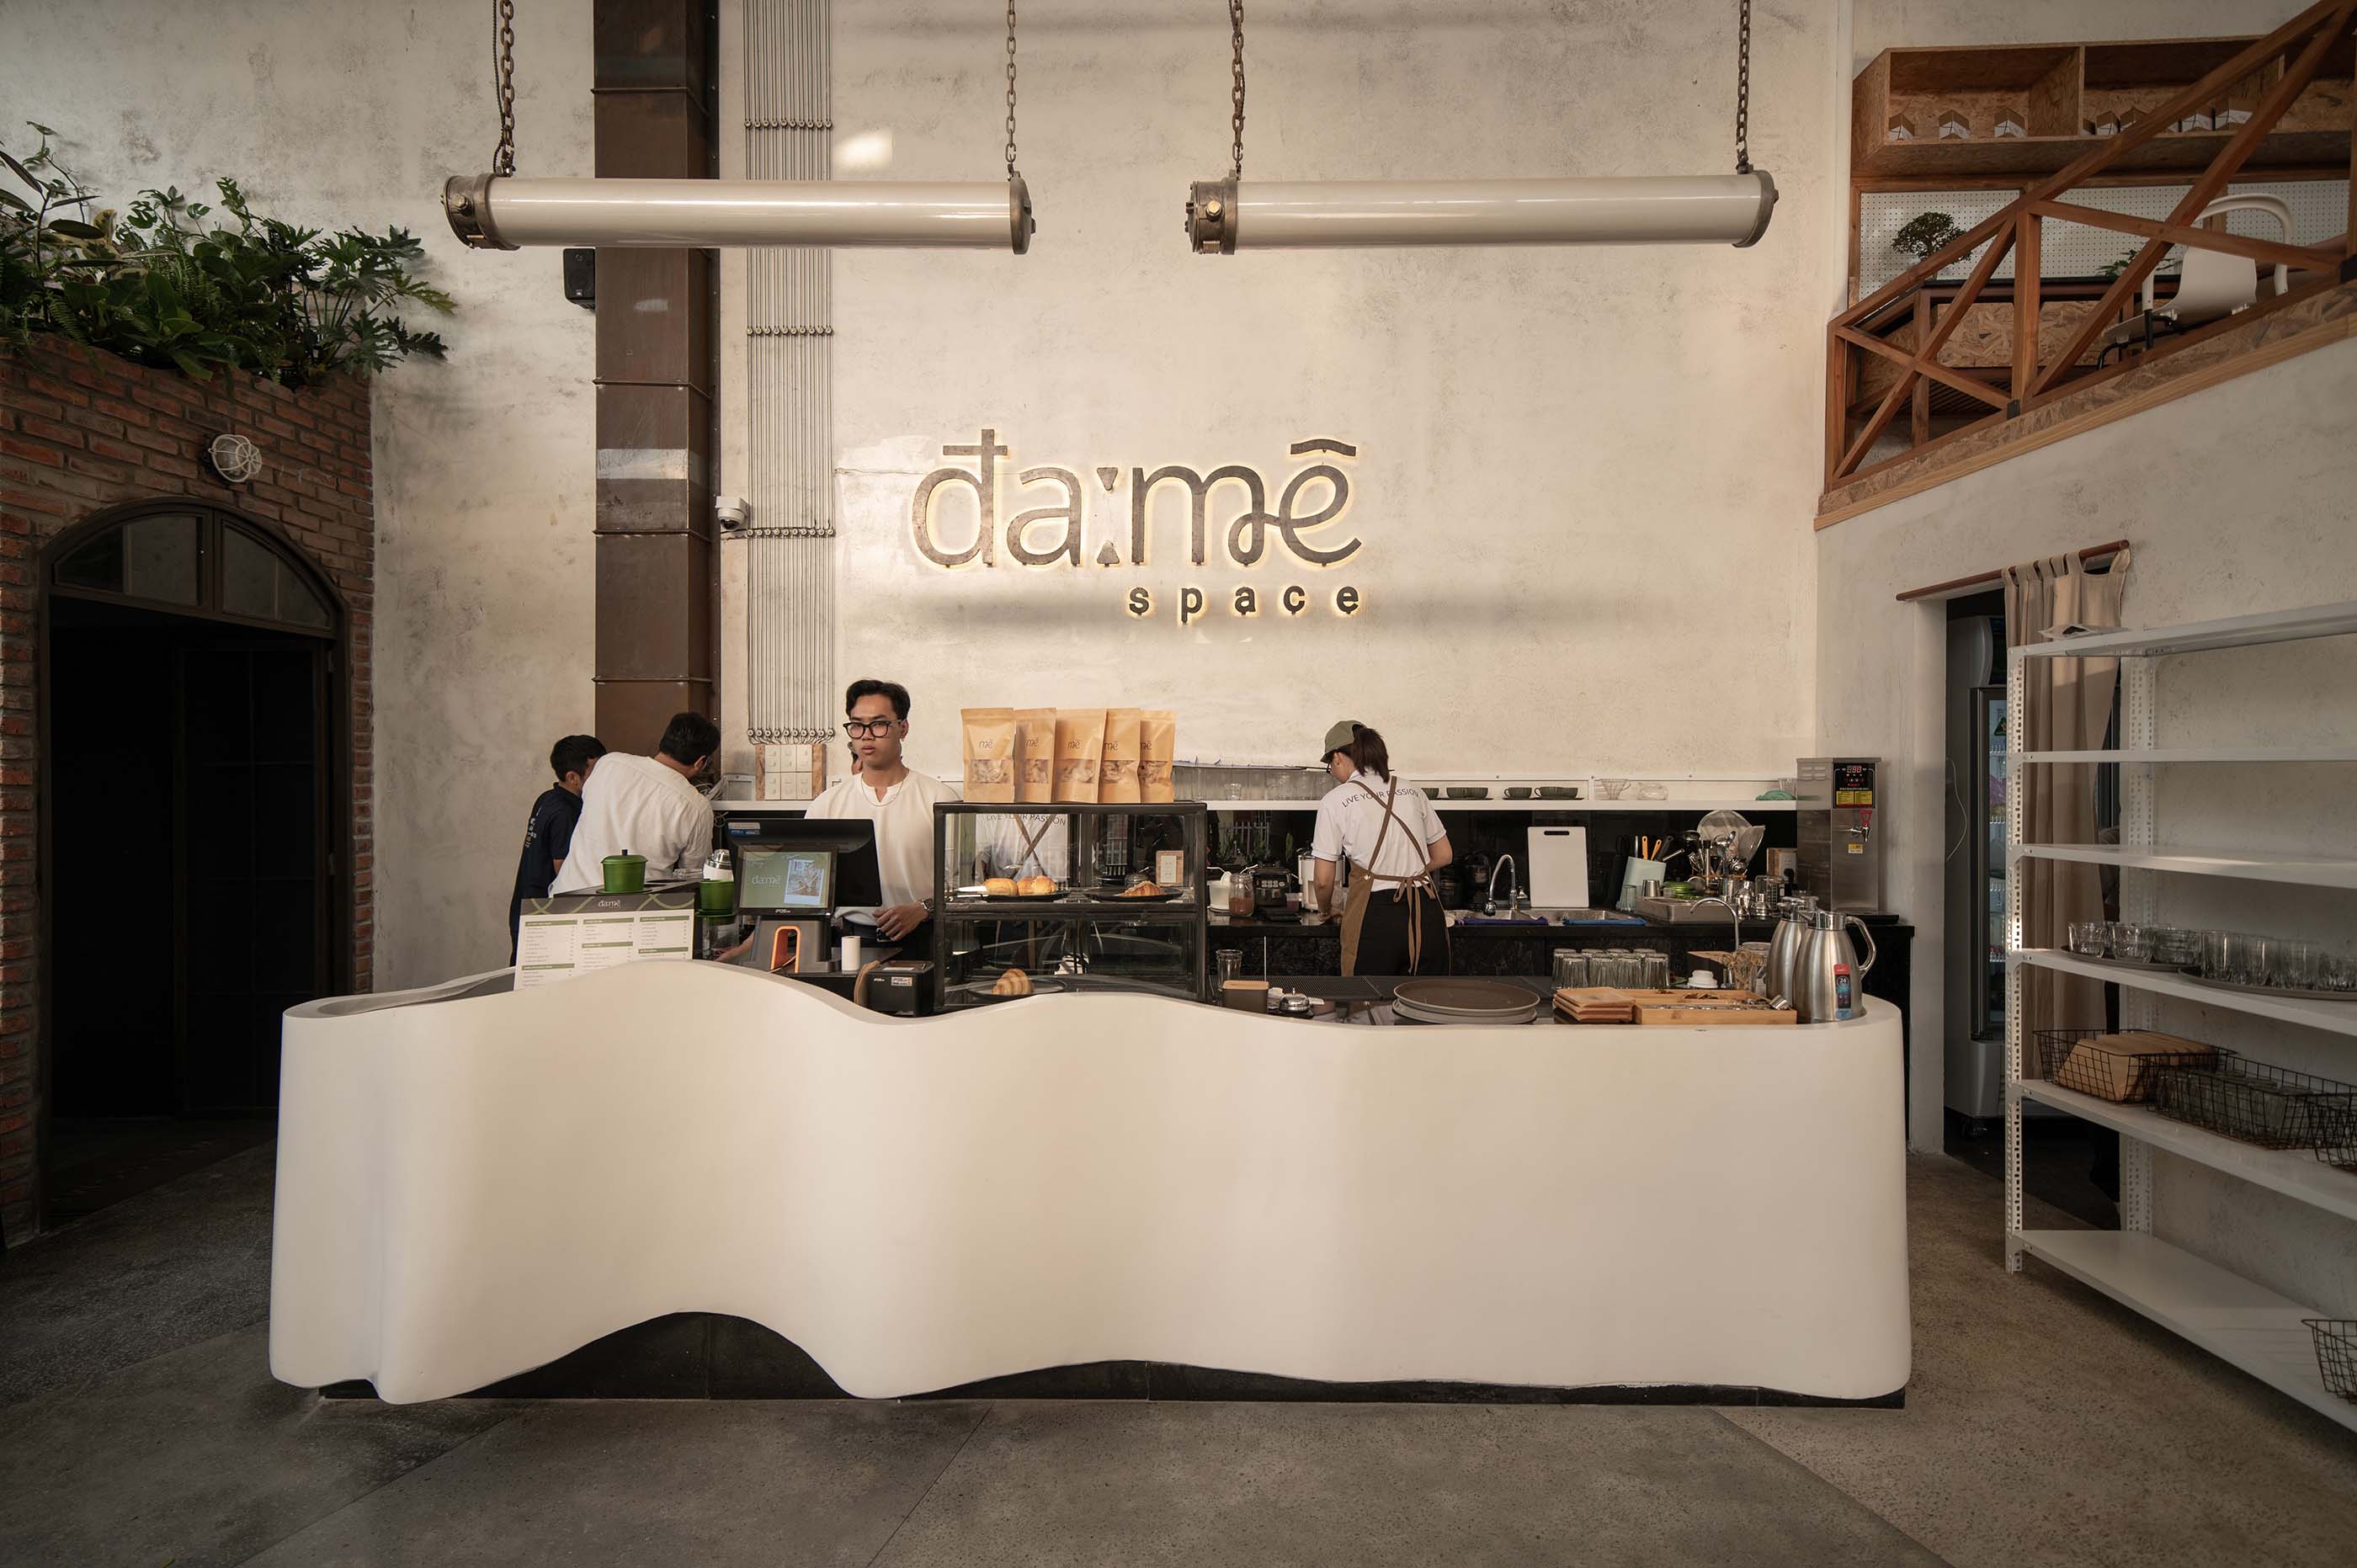 Đa:mê Cafe Rebrand Visual Identity by Row Nguyen